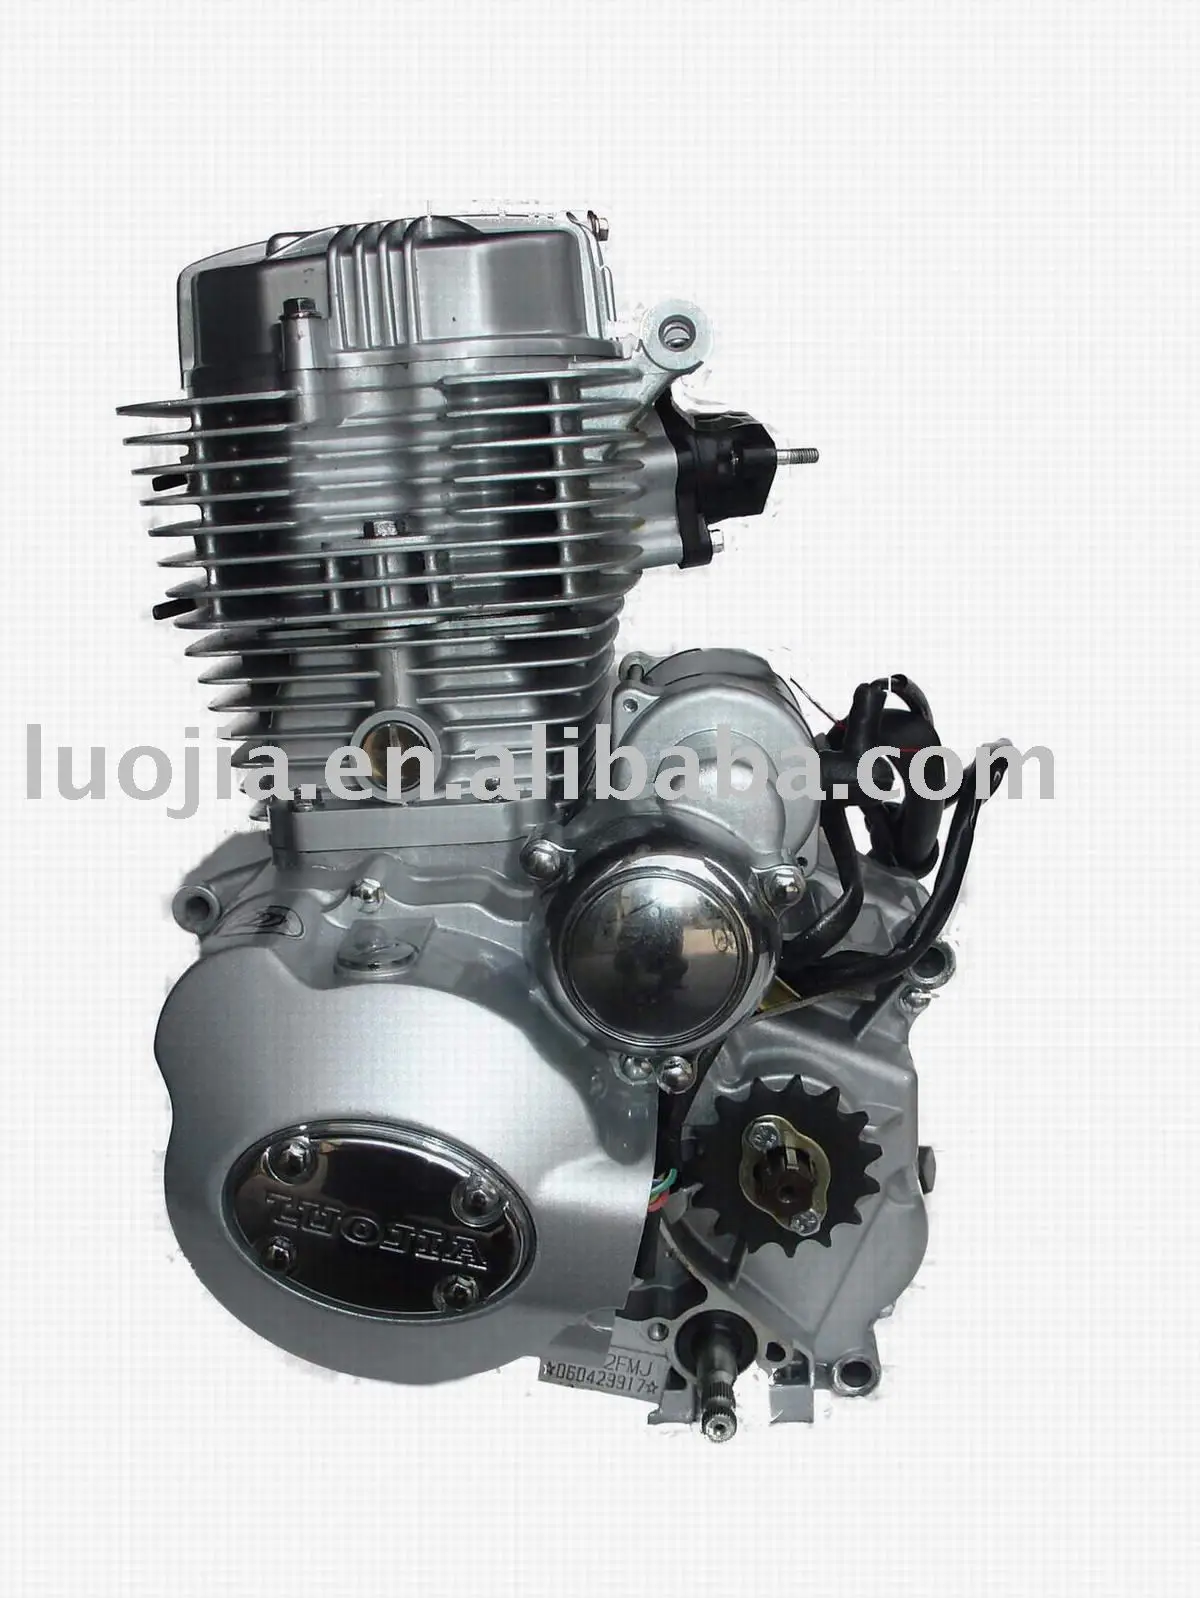 125cc 2 stroke engine